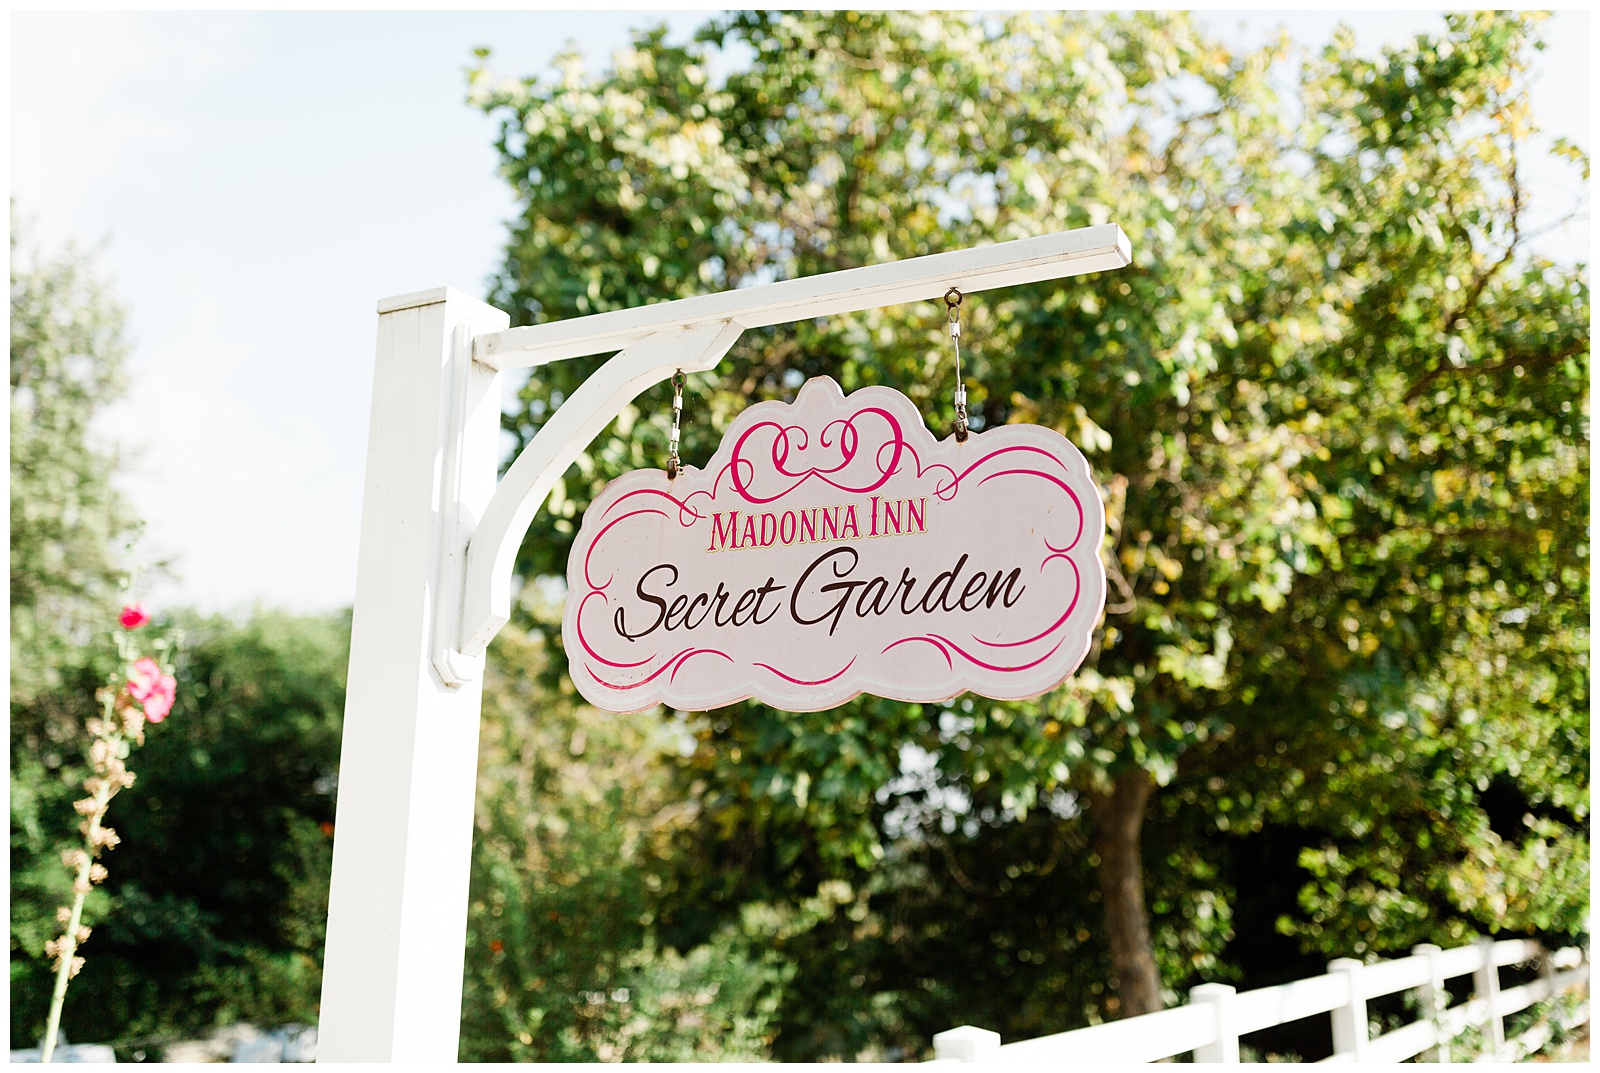 Sign of the Secret Garden at the Madonna Inn in San Luis Obispo